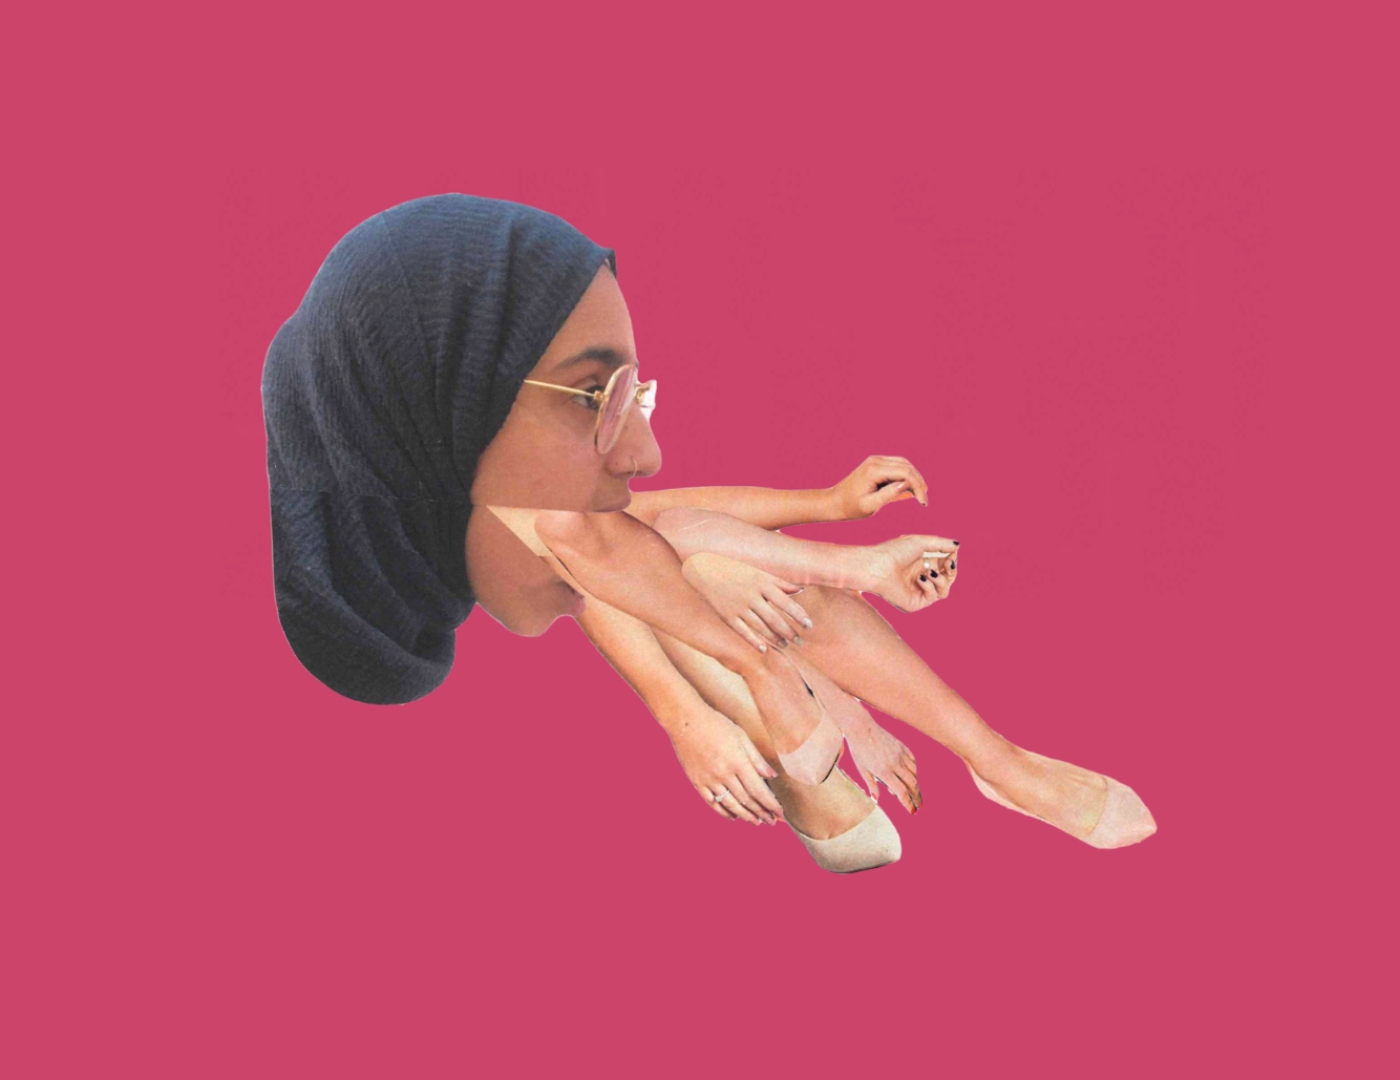 Egyptian arabic lesbian falaka feet free porn image